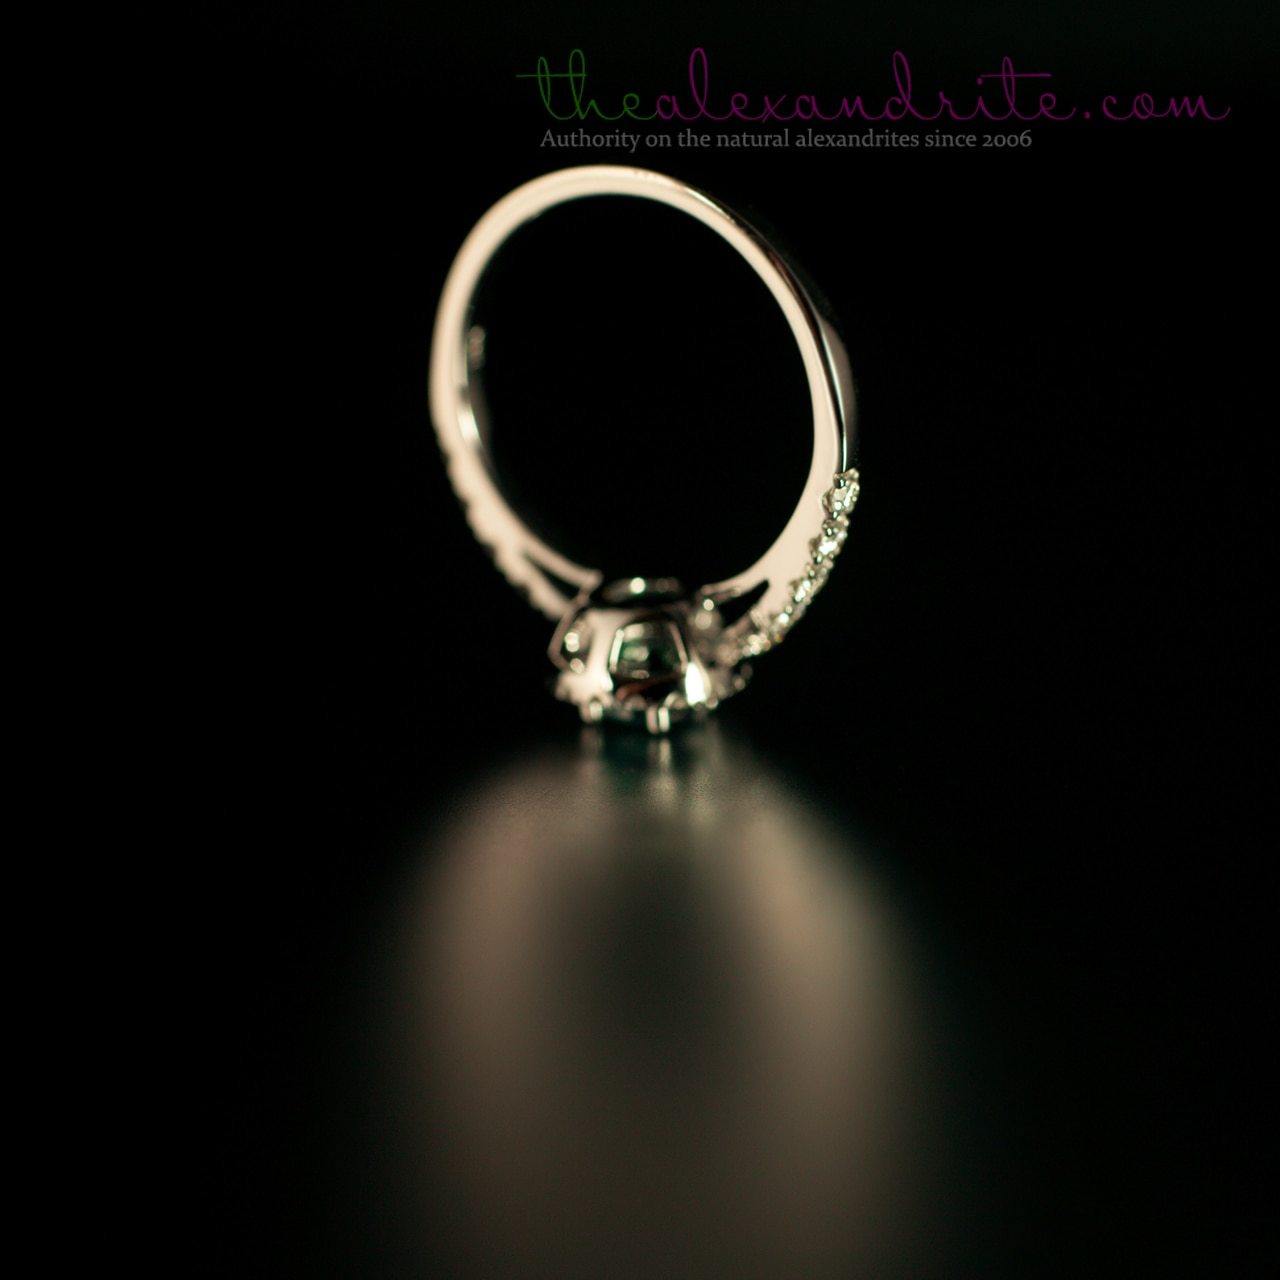 Natural Alexandrite 18k White Gold Engagement Ring - The Alexandrite